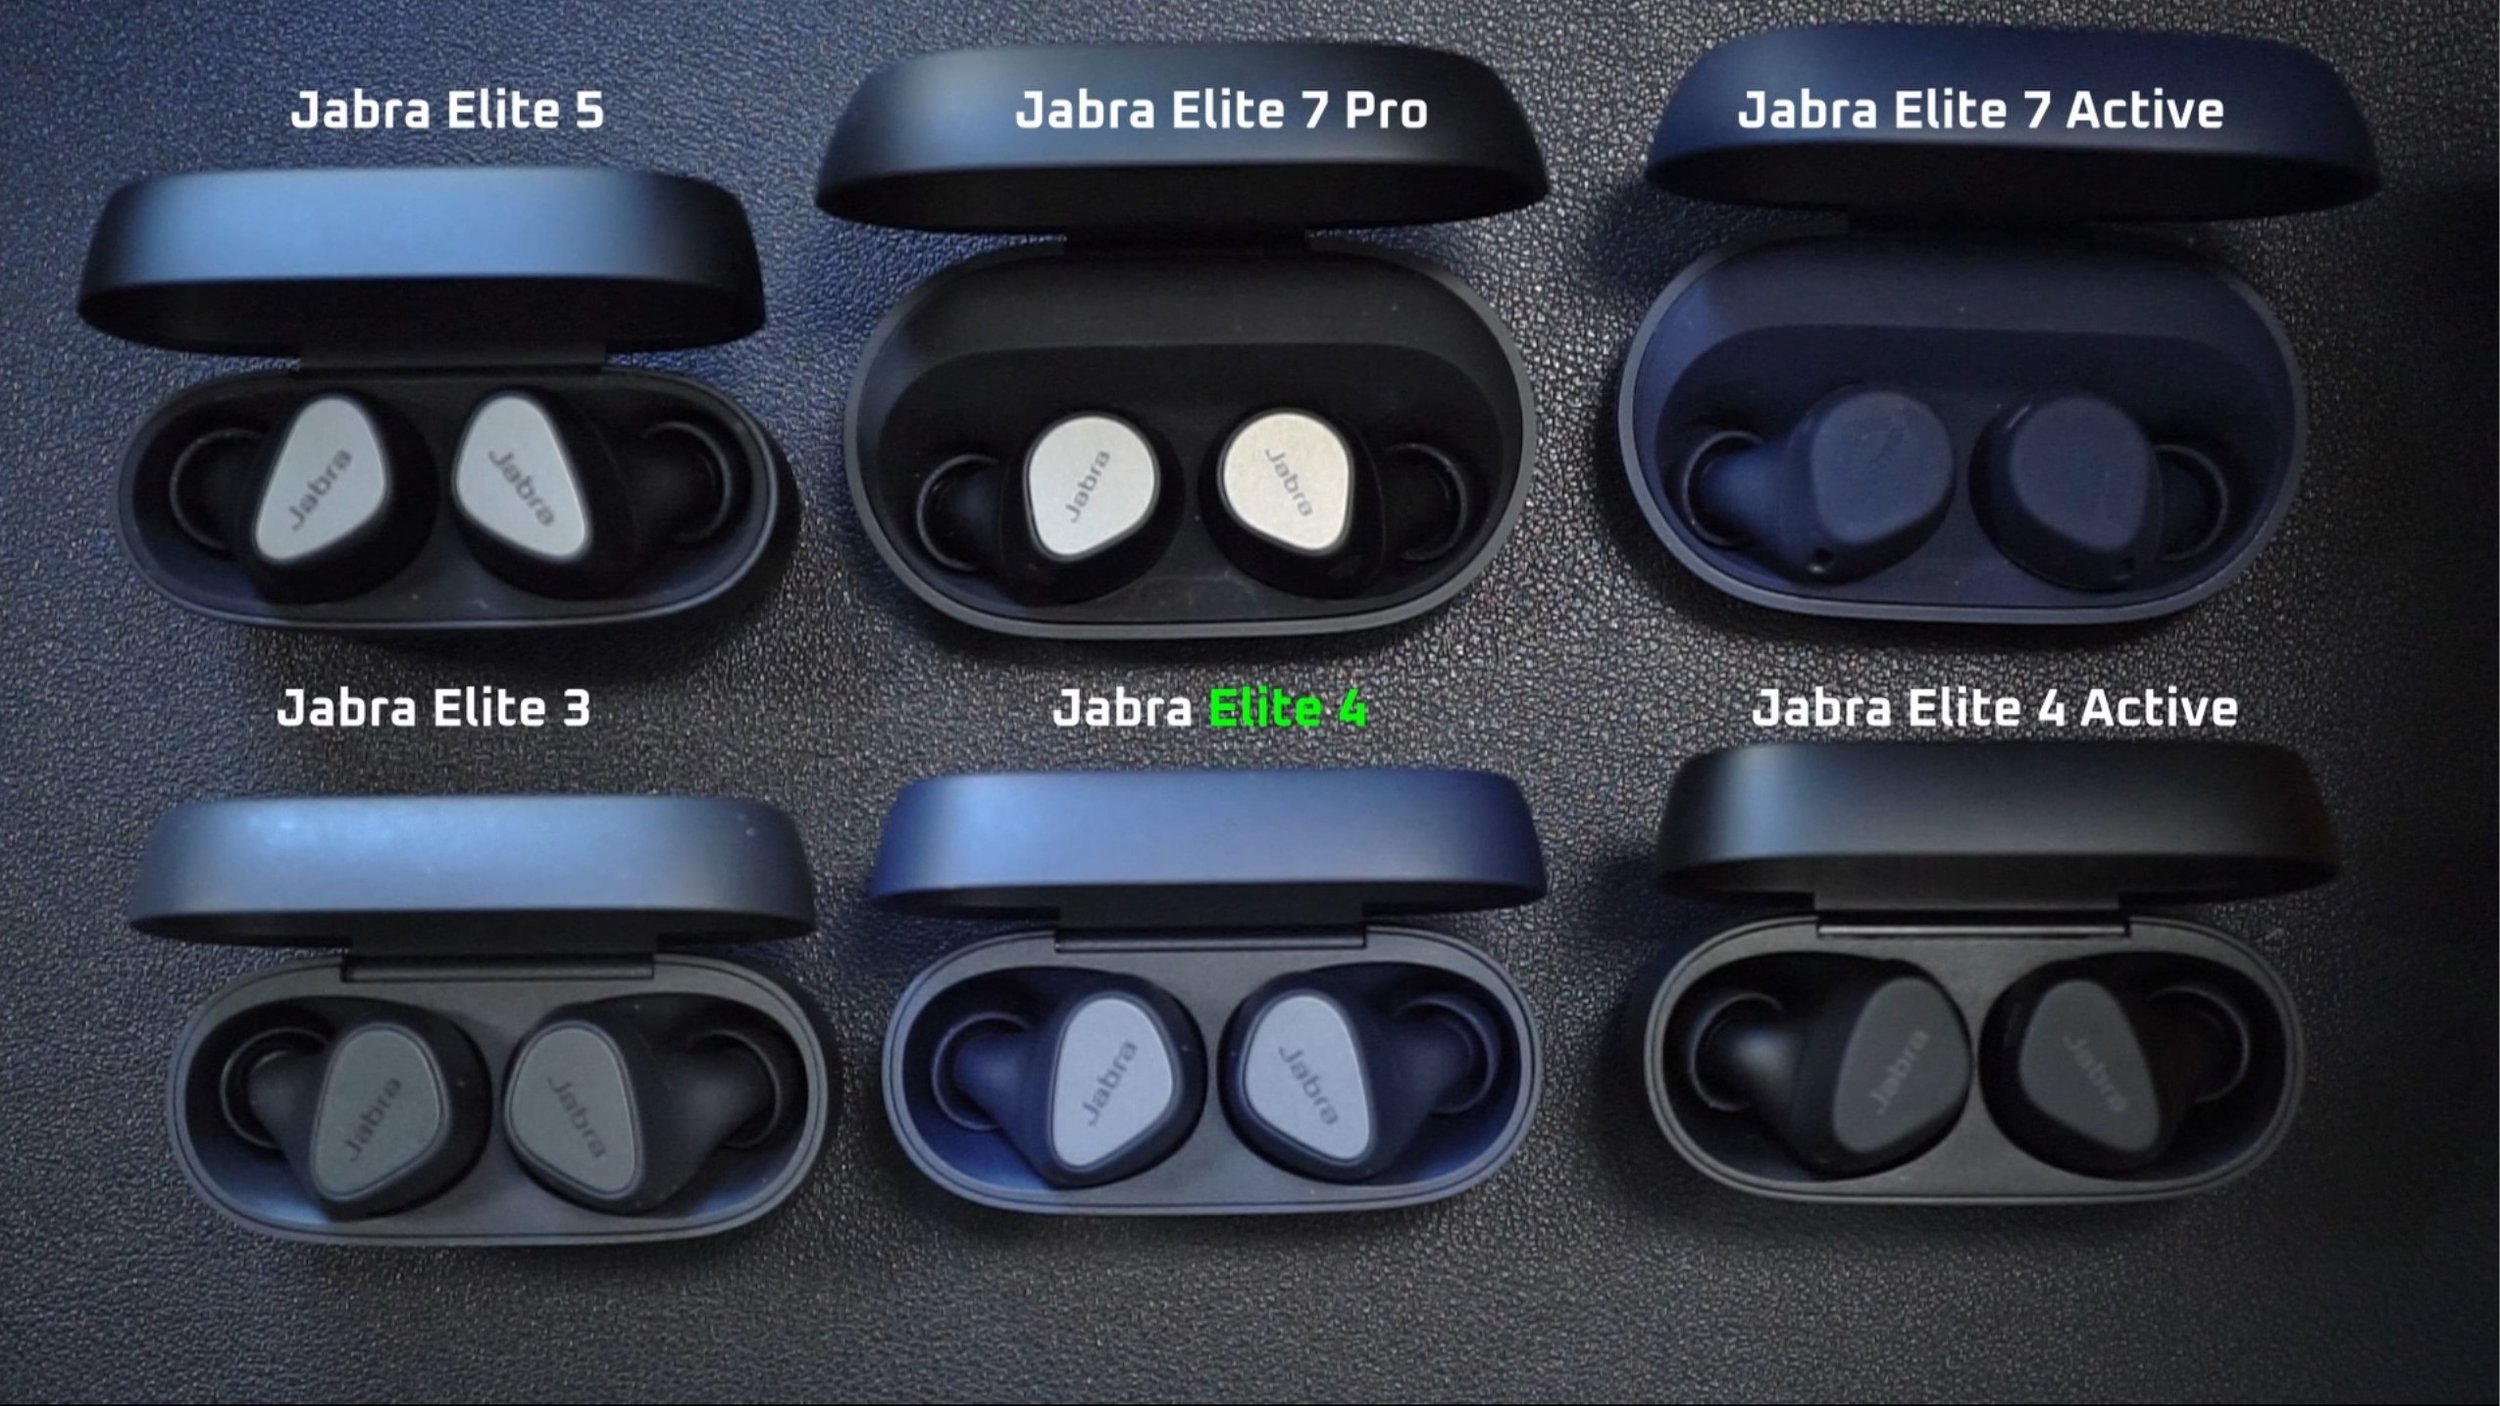 Jabra Elite 4 Active Reviews, Pros and Cons